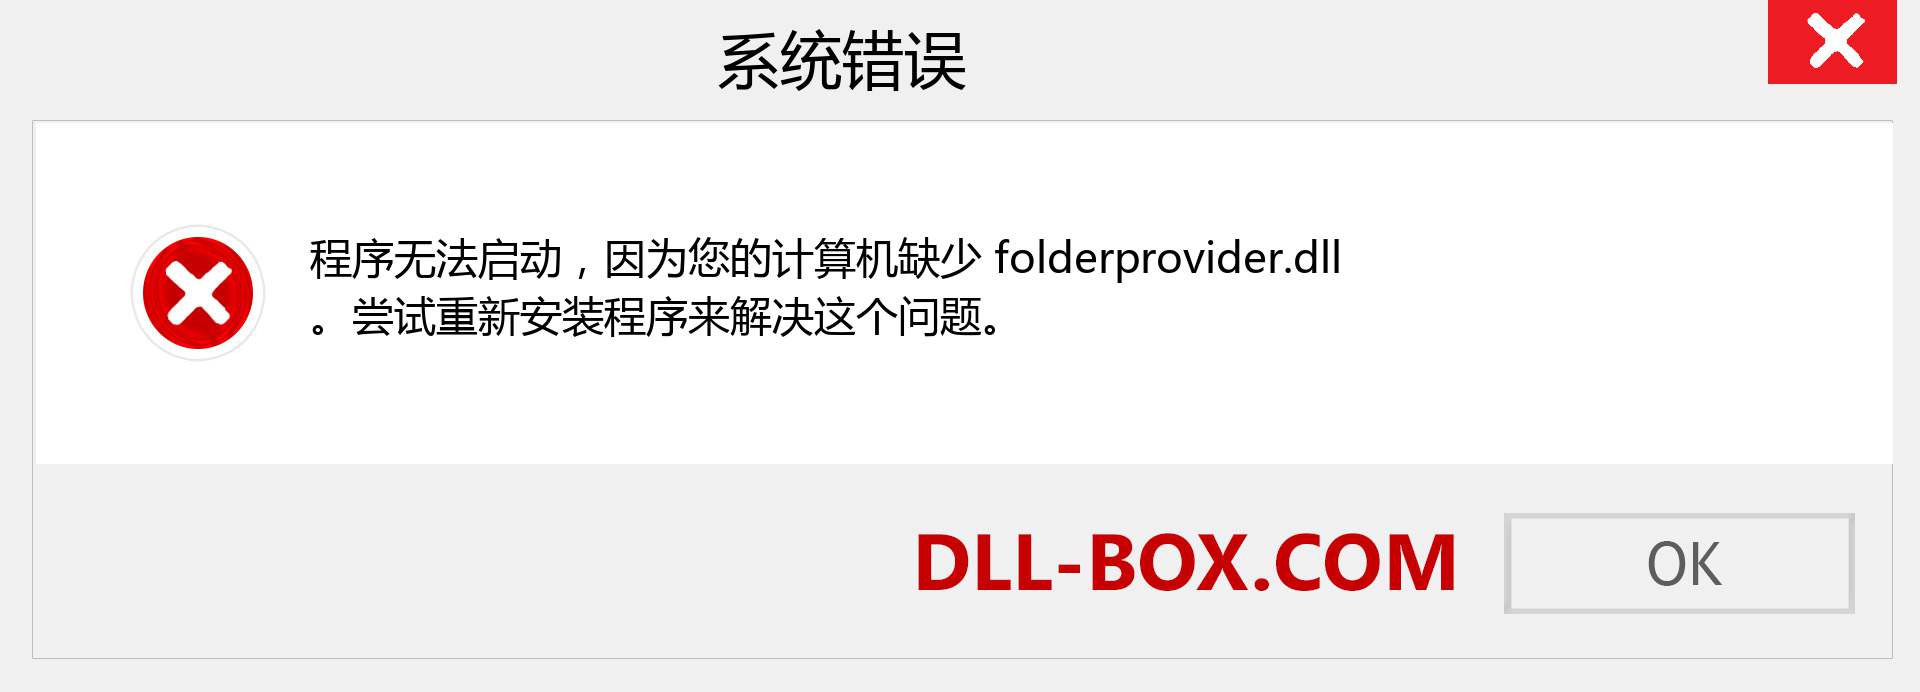 folderprovider.dll 文件丢失？。 适用于 Windows 7、8、10 的下载 - 修复 Windows、照片、图像上的 folderprovider dll 丢失错误